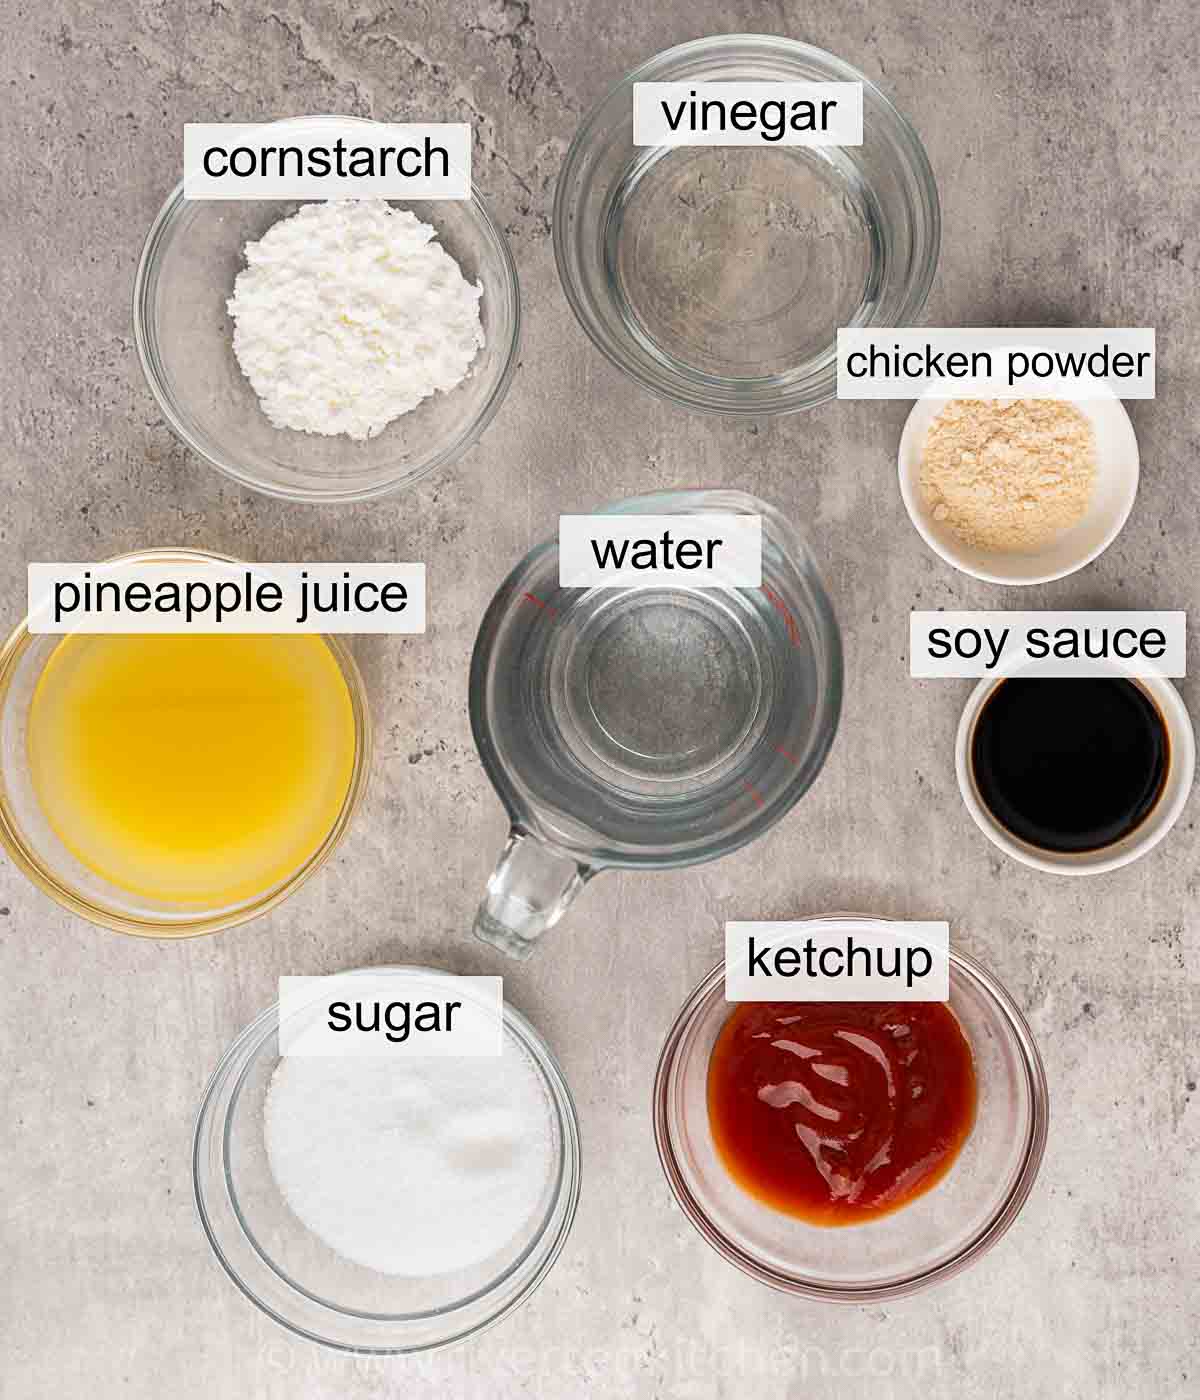 cornstarch, water, sugar, vinegar, pineapple juice, ketchup, soy sauce, and chicken powder.